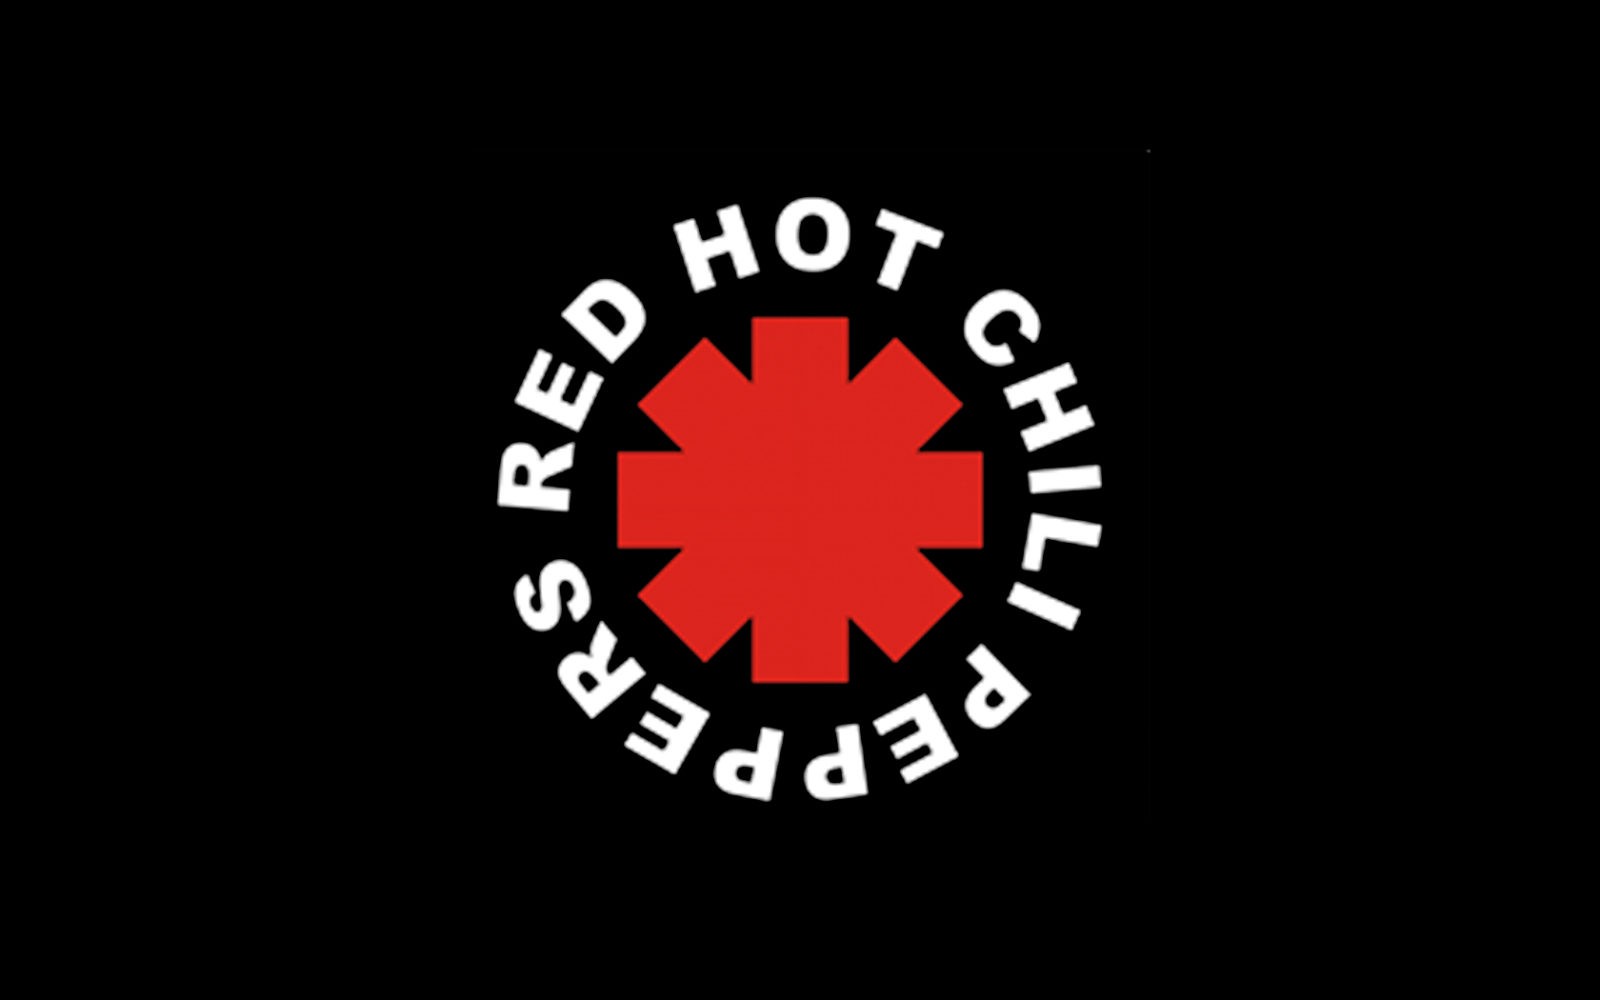 Le nouvel album des Red Hot Chili Peppers sort aujourd’hui